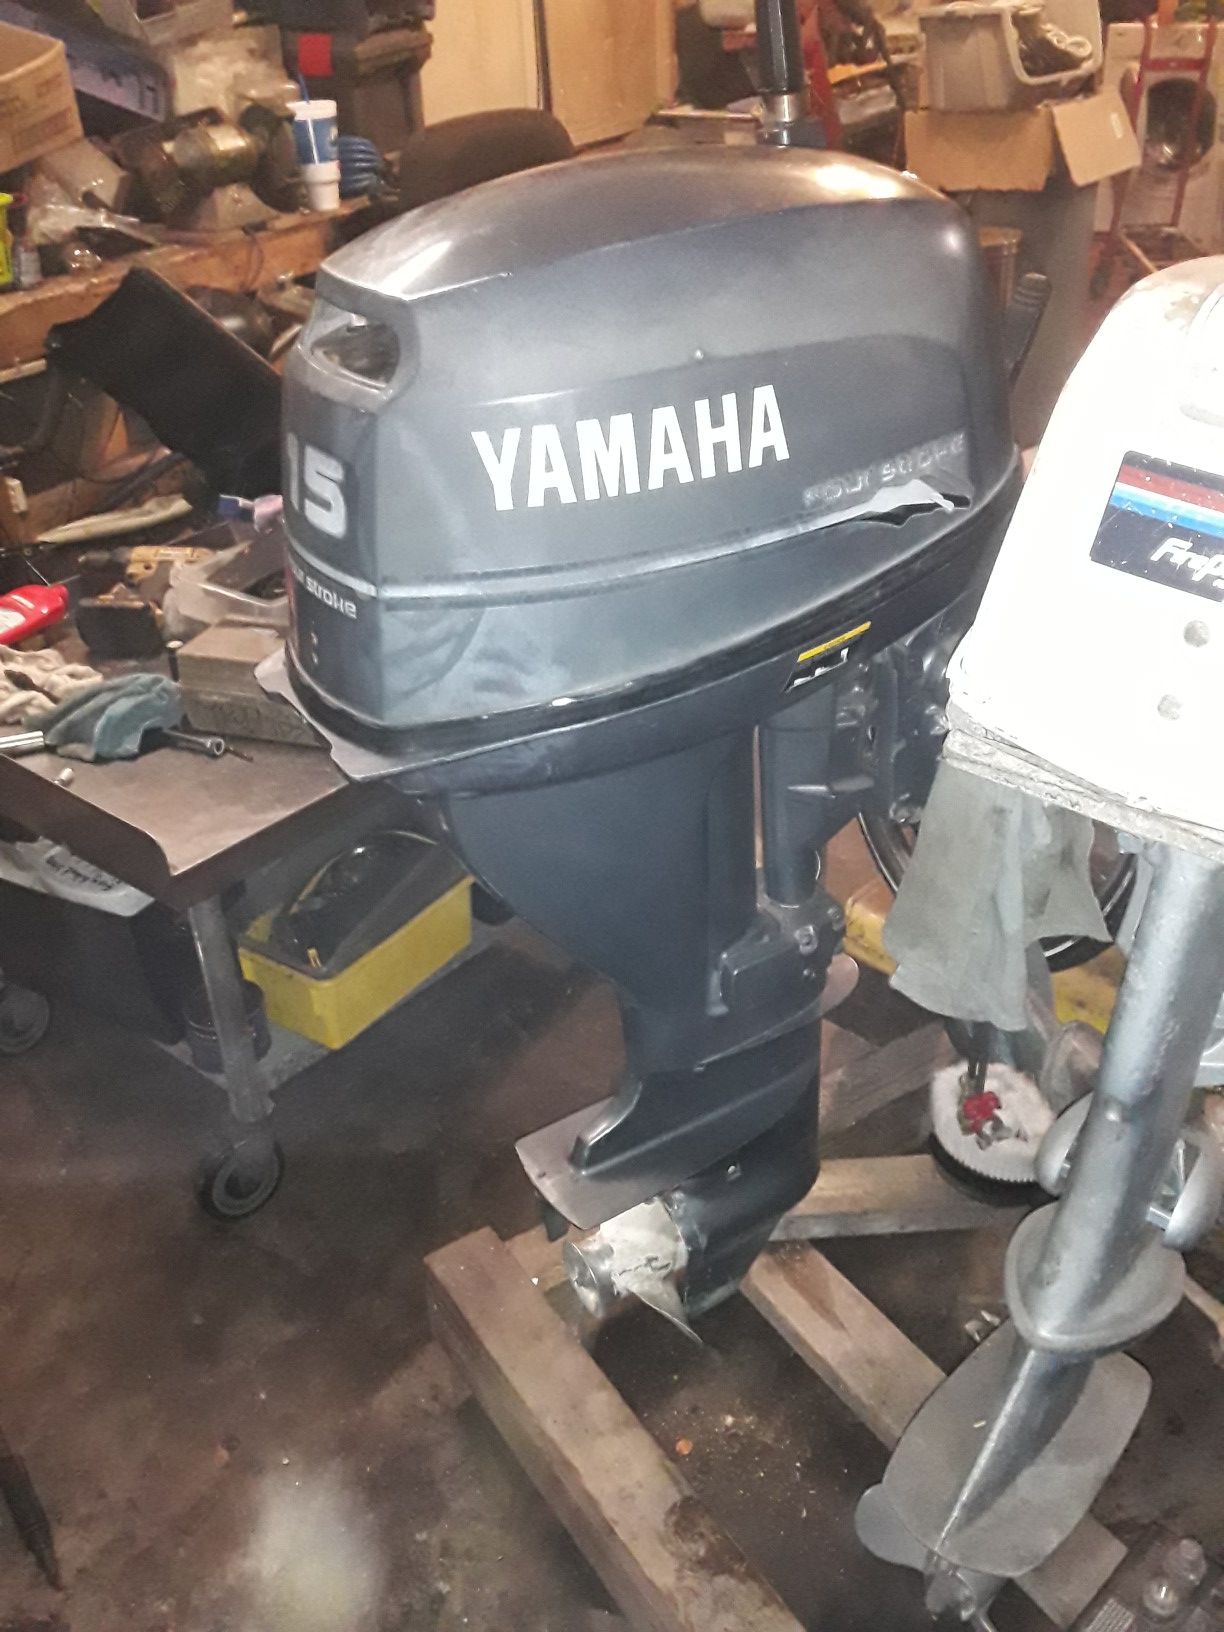 Yamaha 15hp 4-stroke electronic ignition long-shaft outboard motor